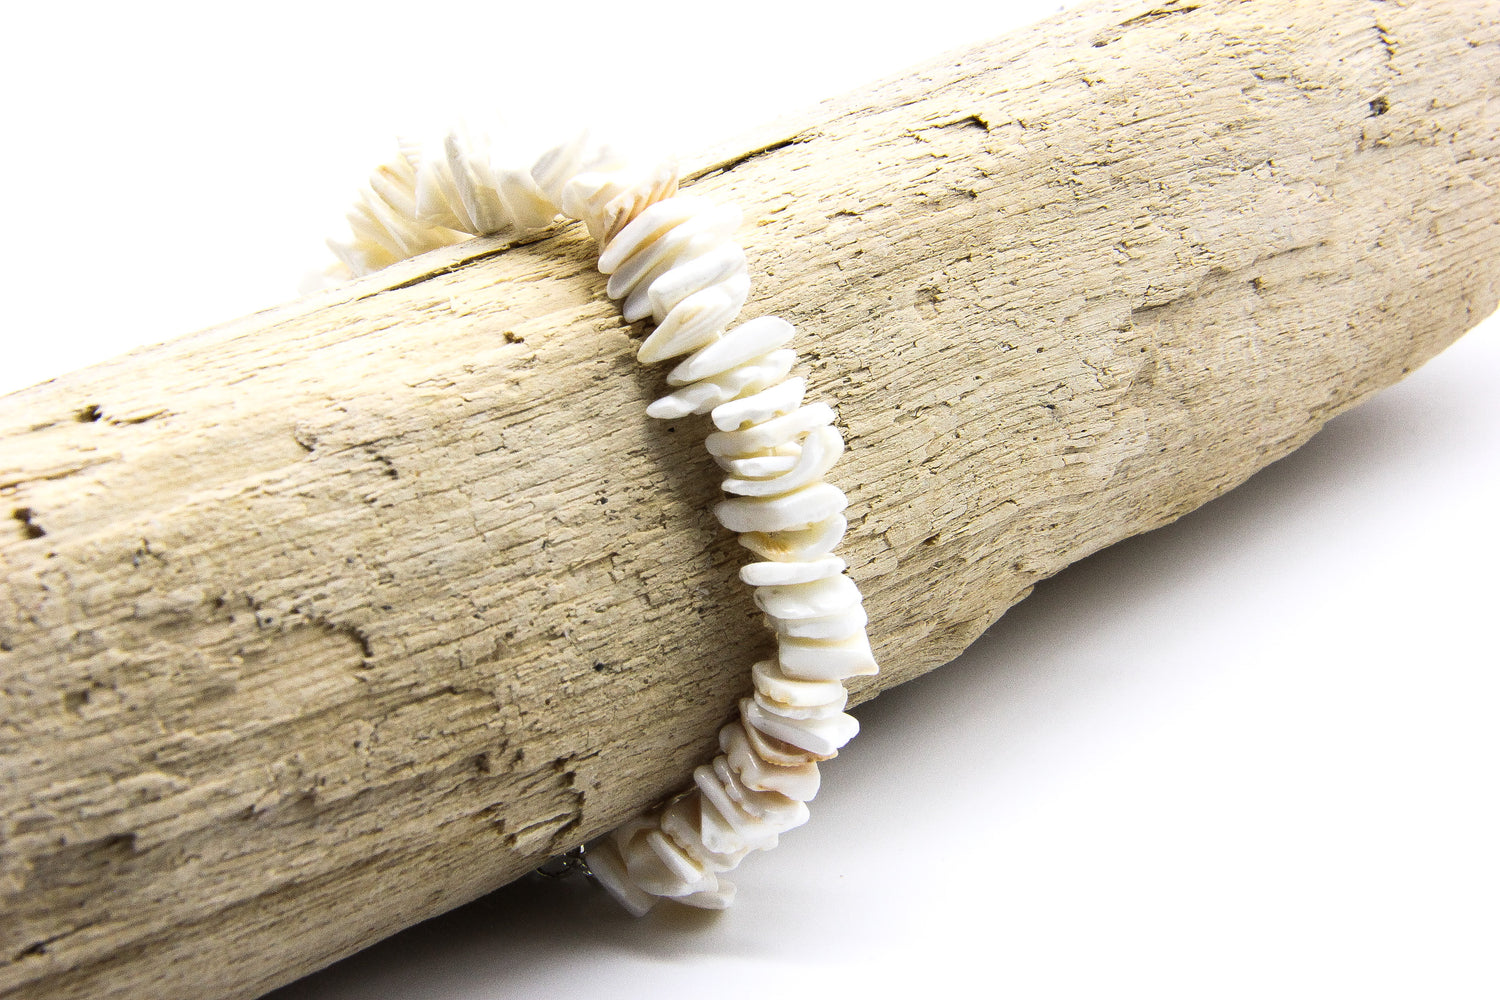 Bracelet of seashell chips displayed on driftwood | Ben's Beach